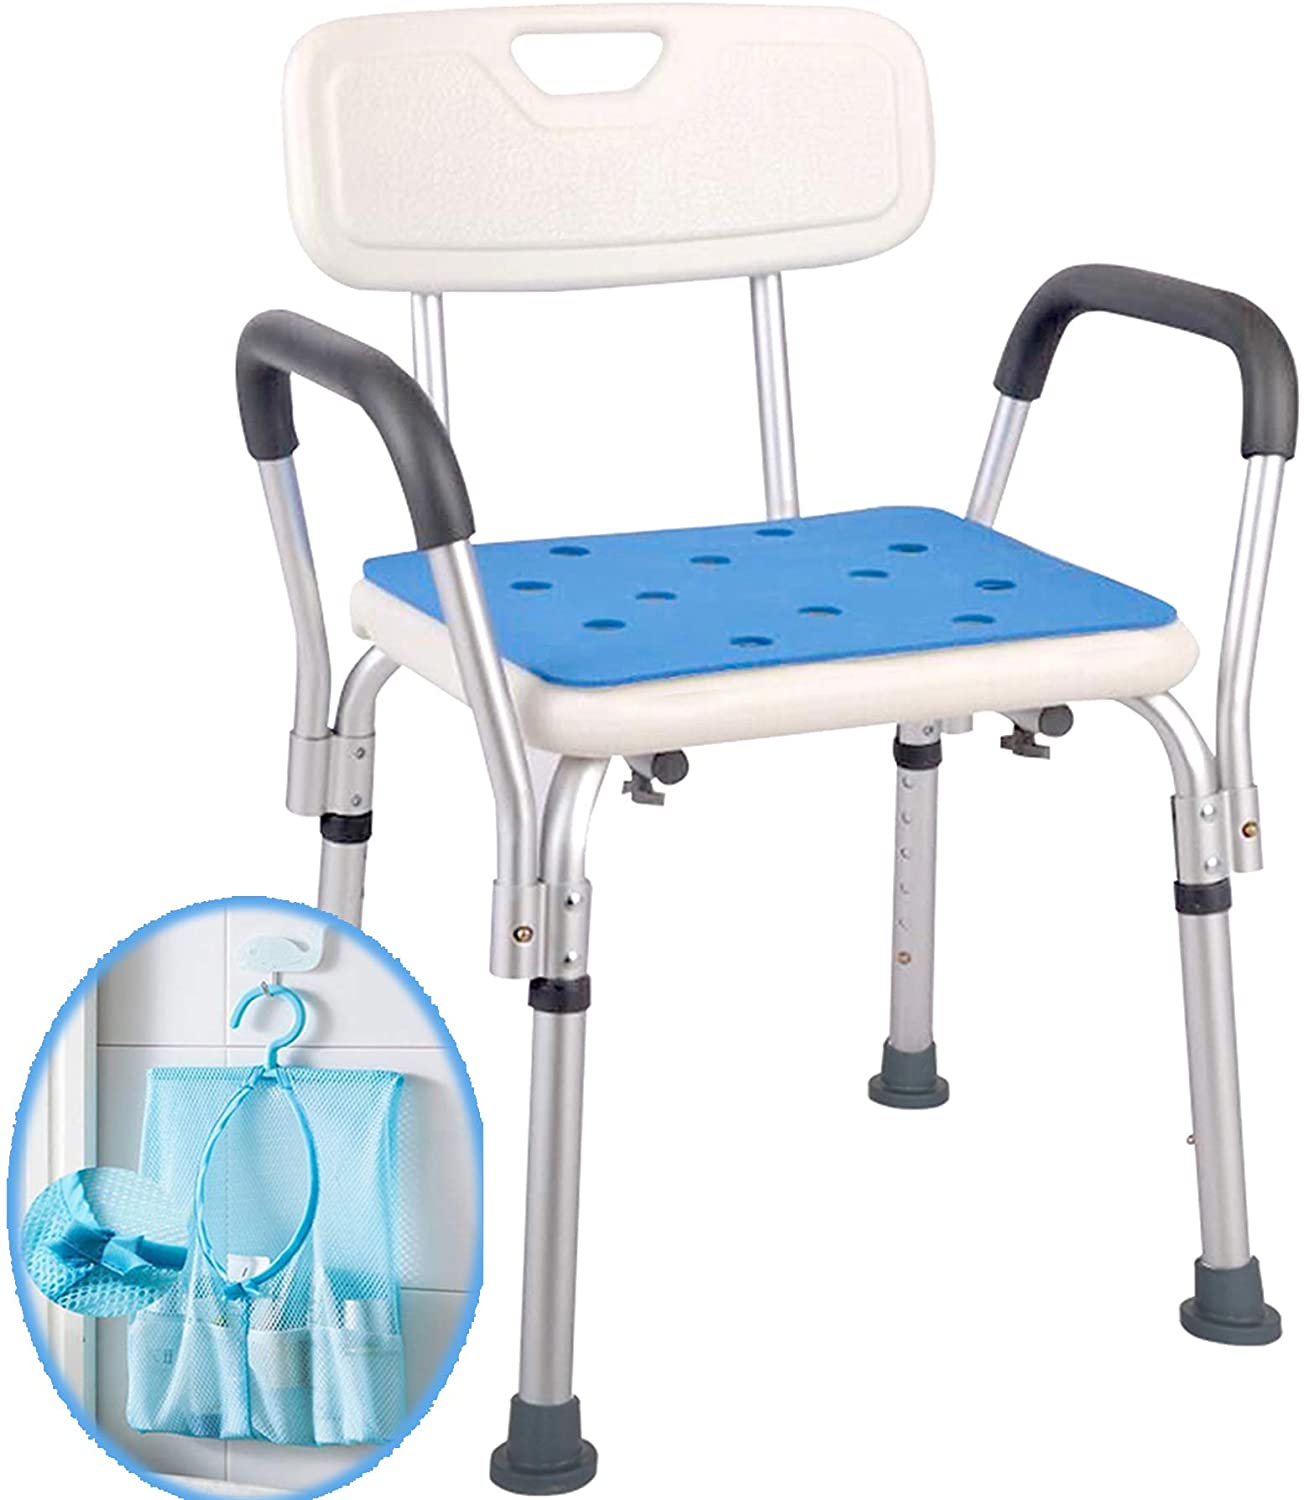 3. Medokare Shower Chair